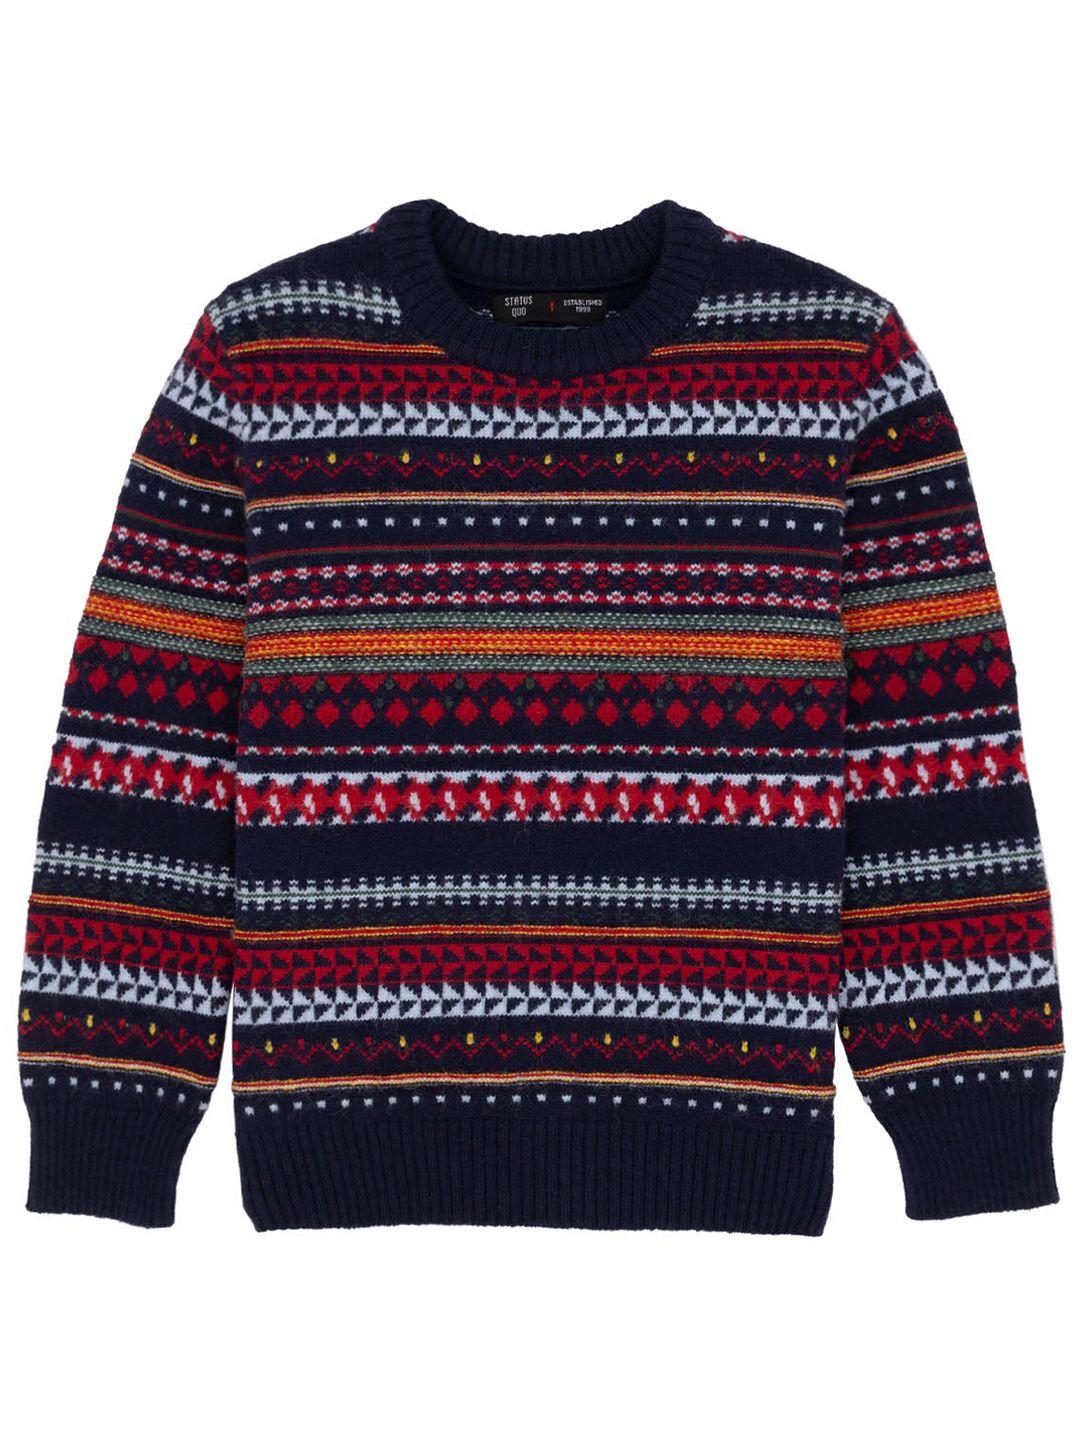 Status Quo Boys Argyle Printed Acrylic Pullover Sweater